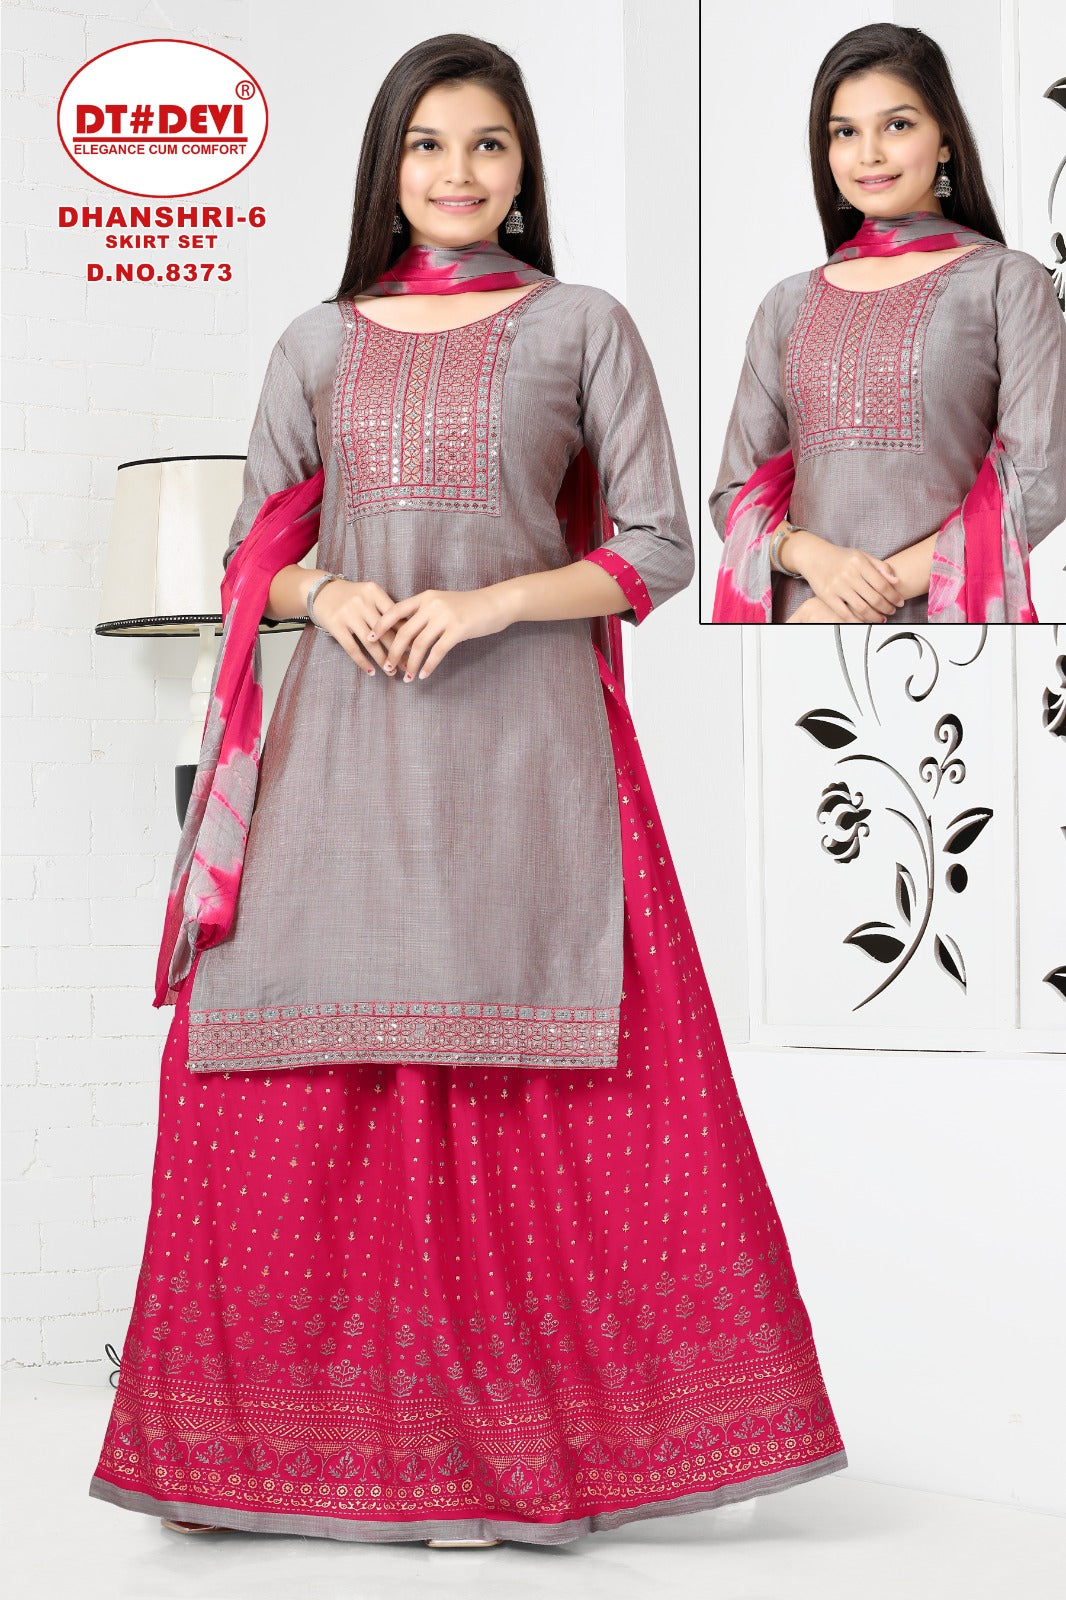 Dhanshri Vol 6-8373 Dt Devi Silk Girls Readymade Skirt Style Suits